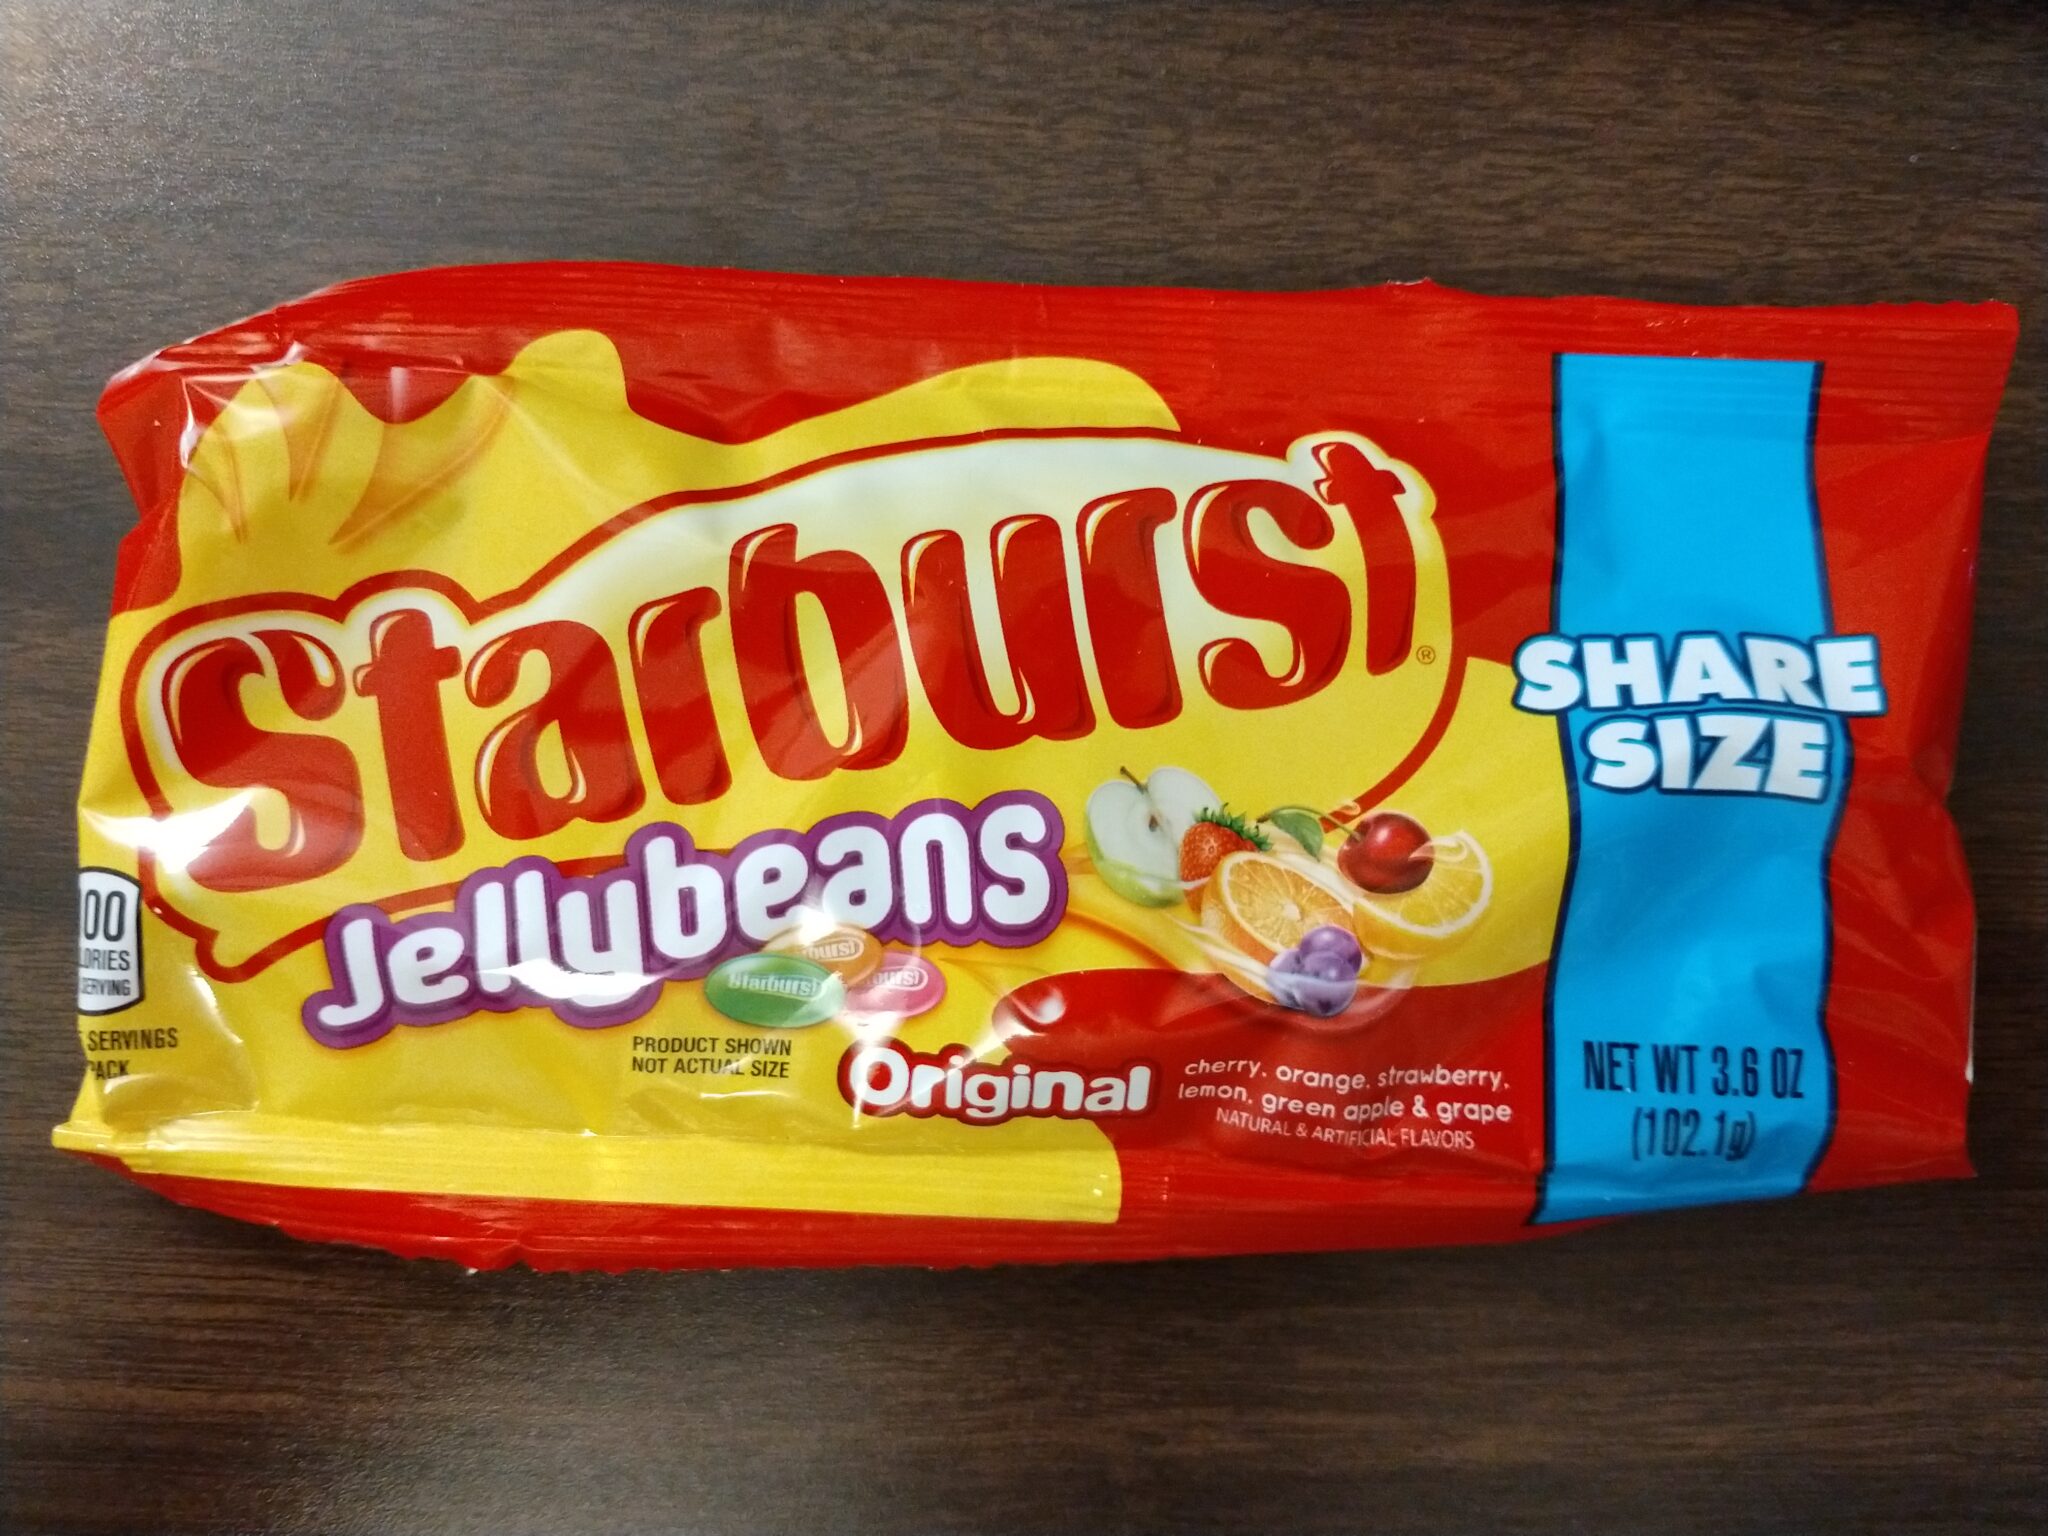 Starburst – Original Jelly Beans